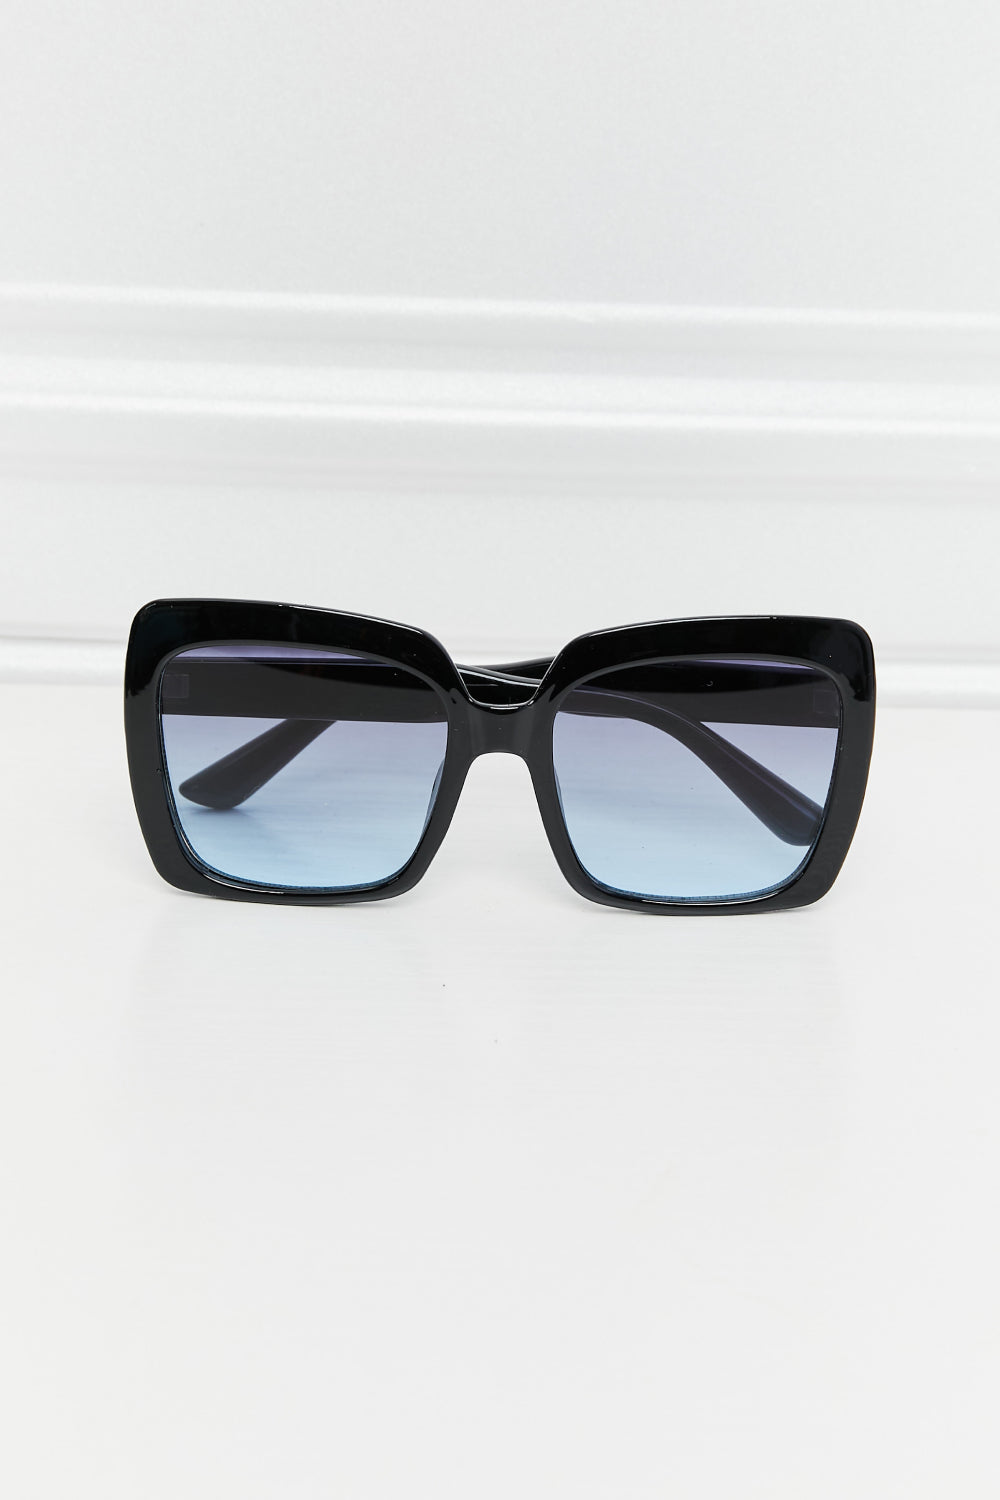 Square Full Rim Sunglasses Black One Size Sunglasses by Vim&Vigor | Vim&Vigor Boutique